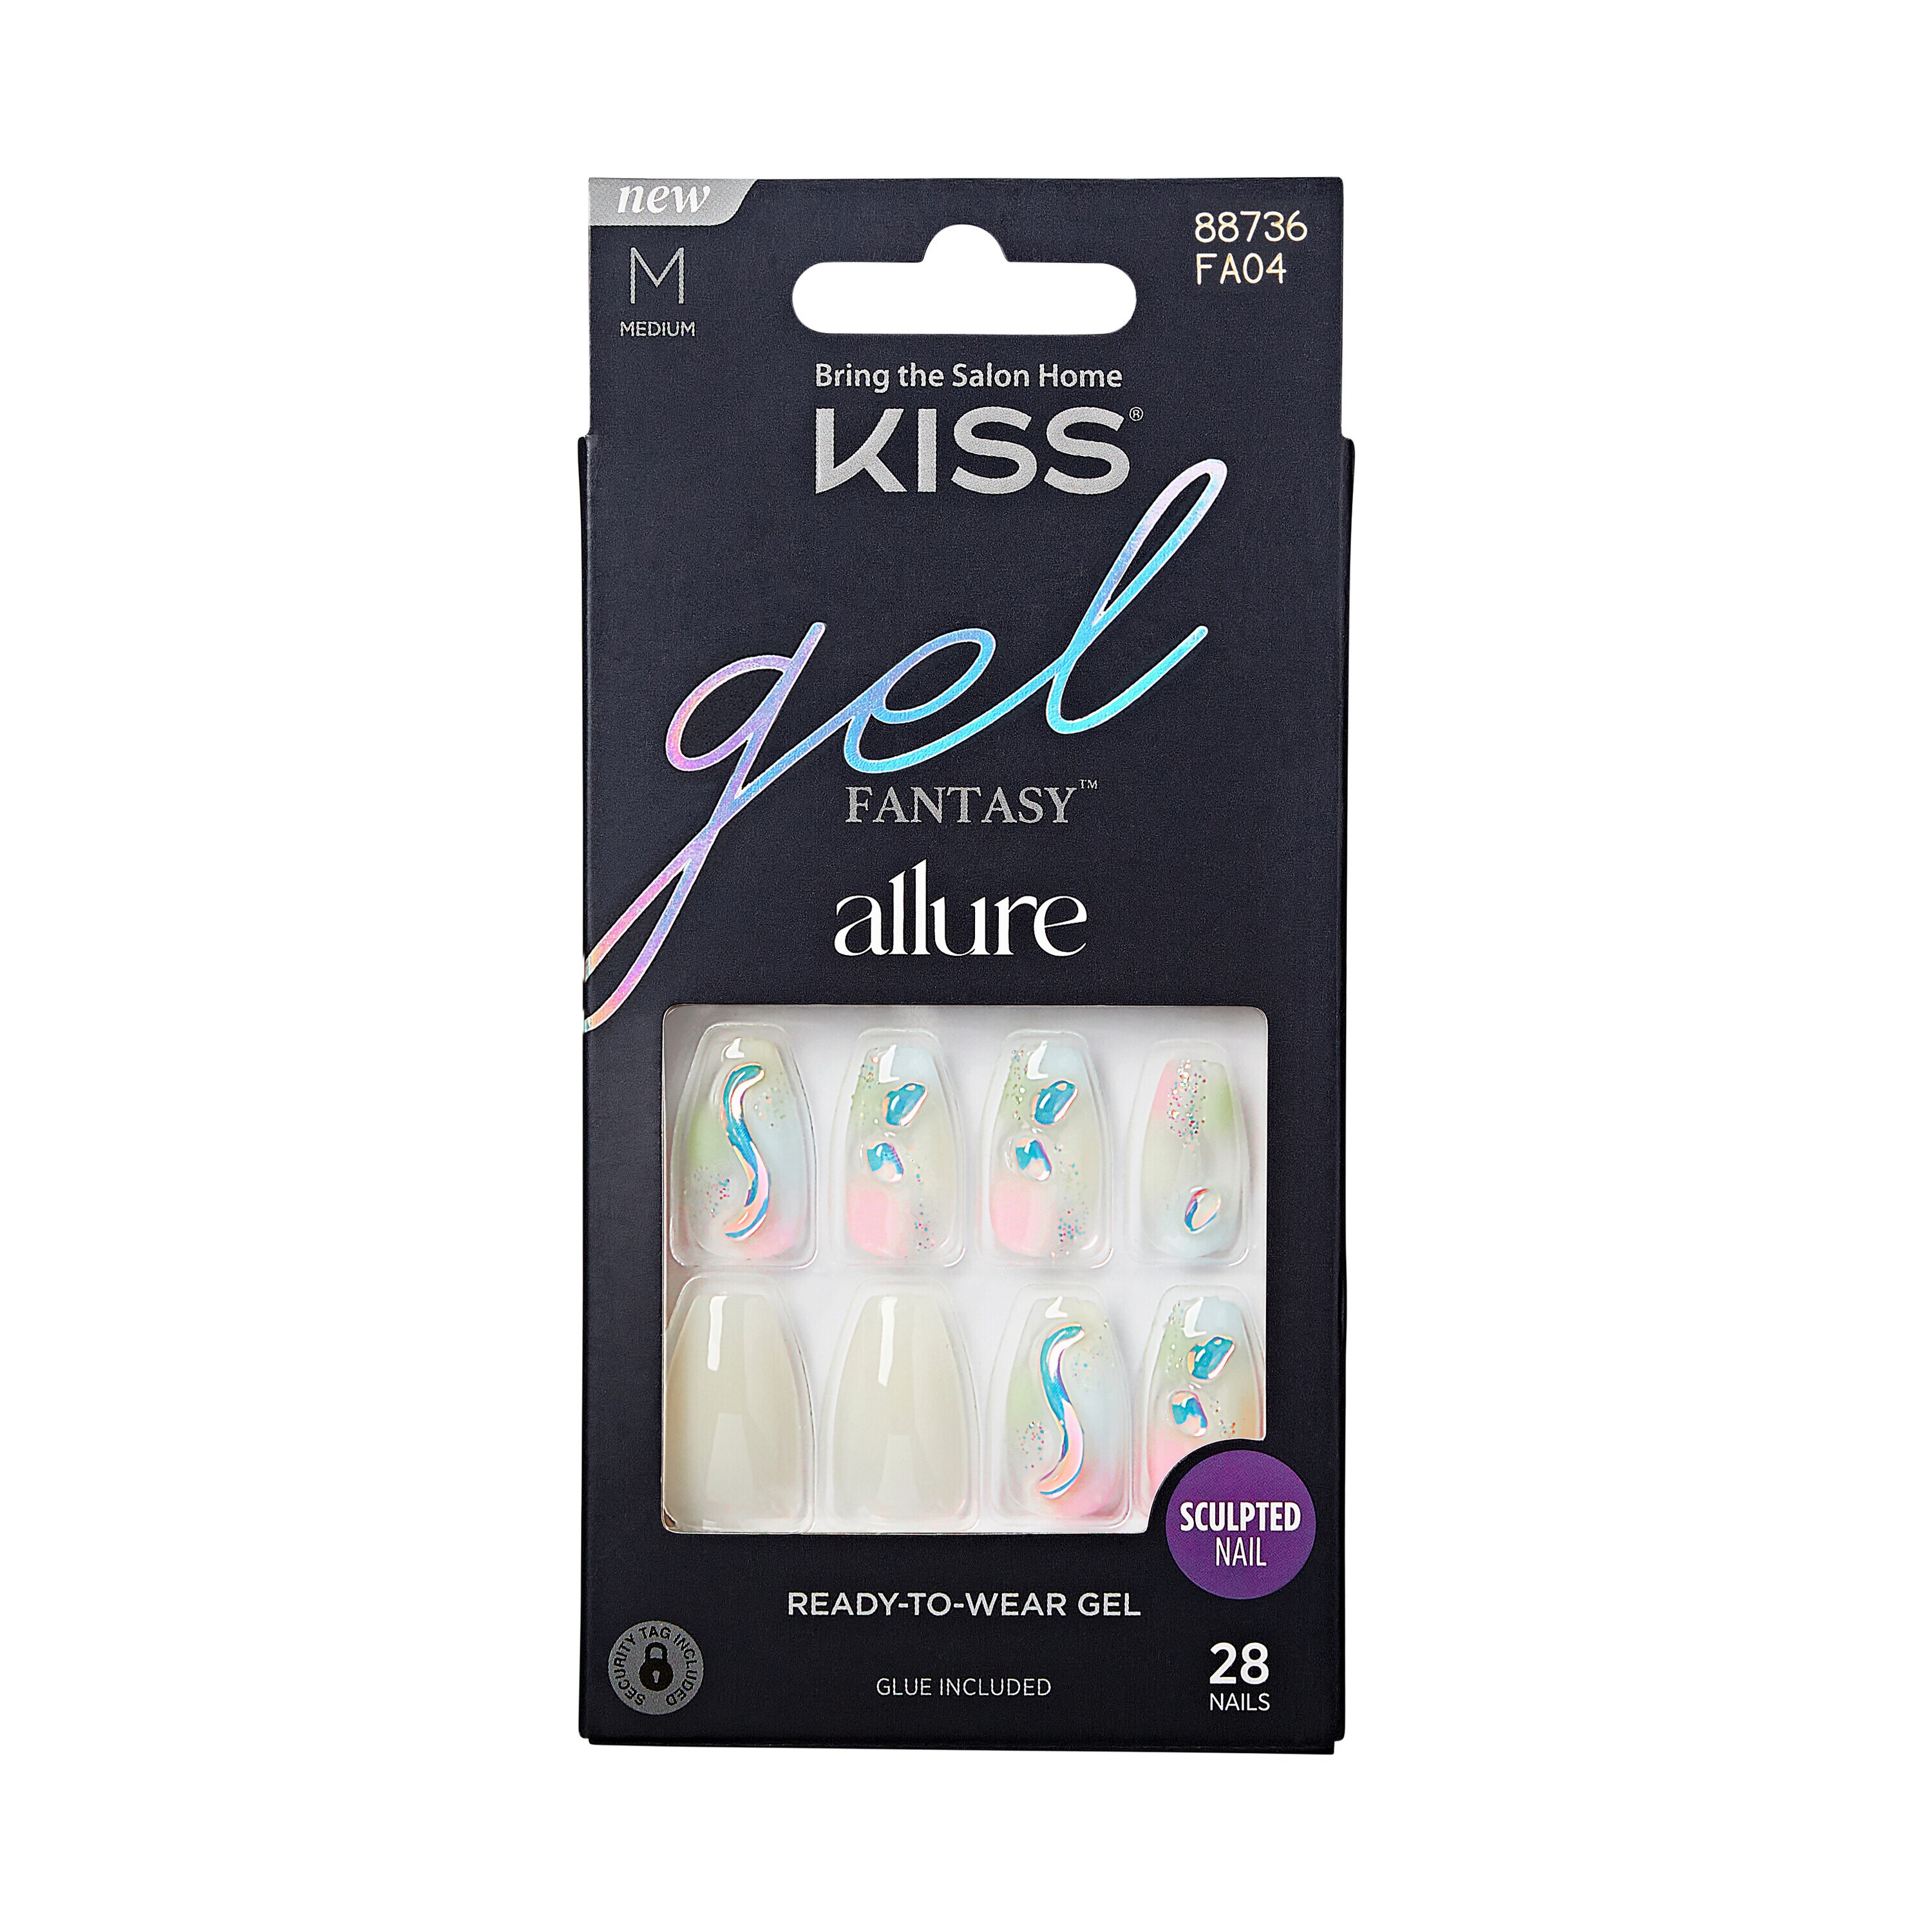 KISS Gel Fantasy Allure Ready-To-Wear Fake Nails